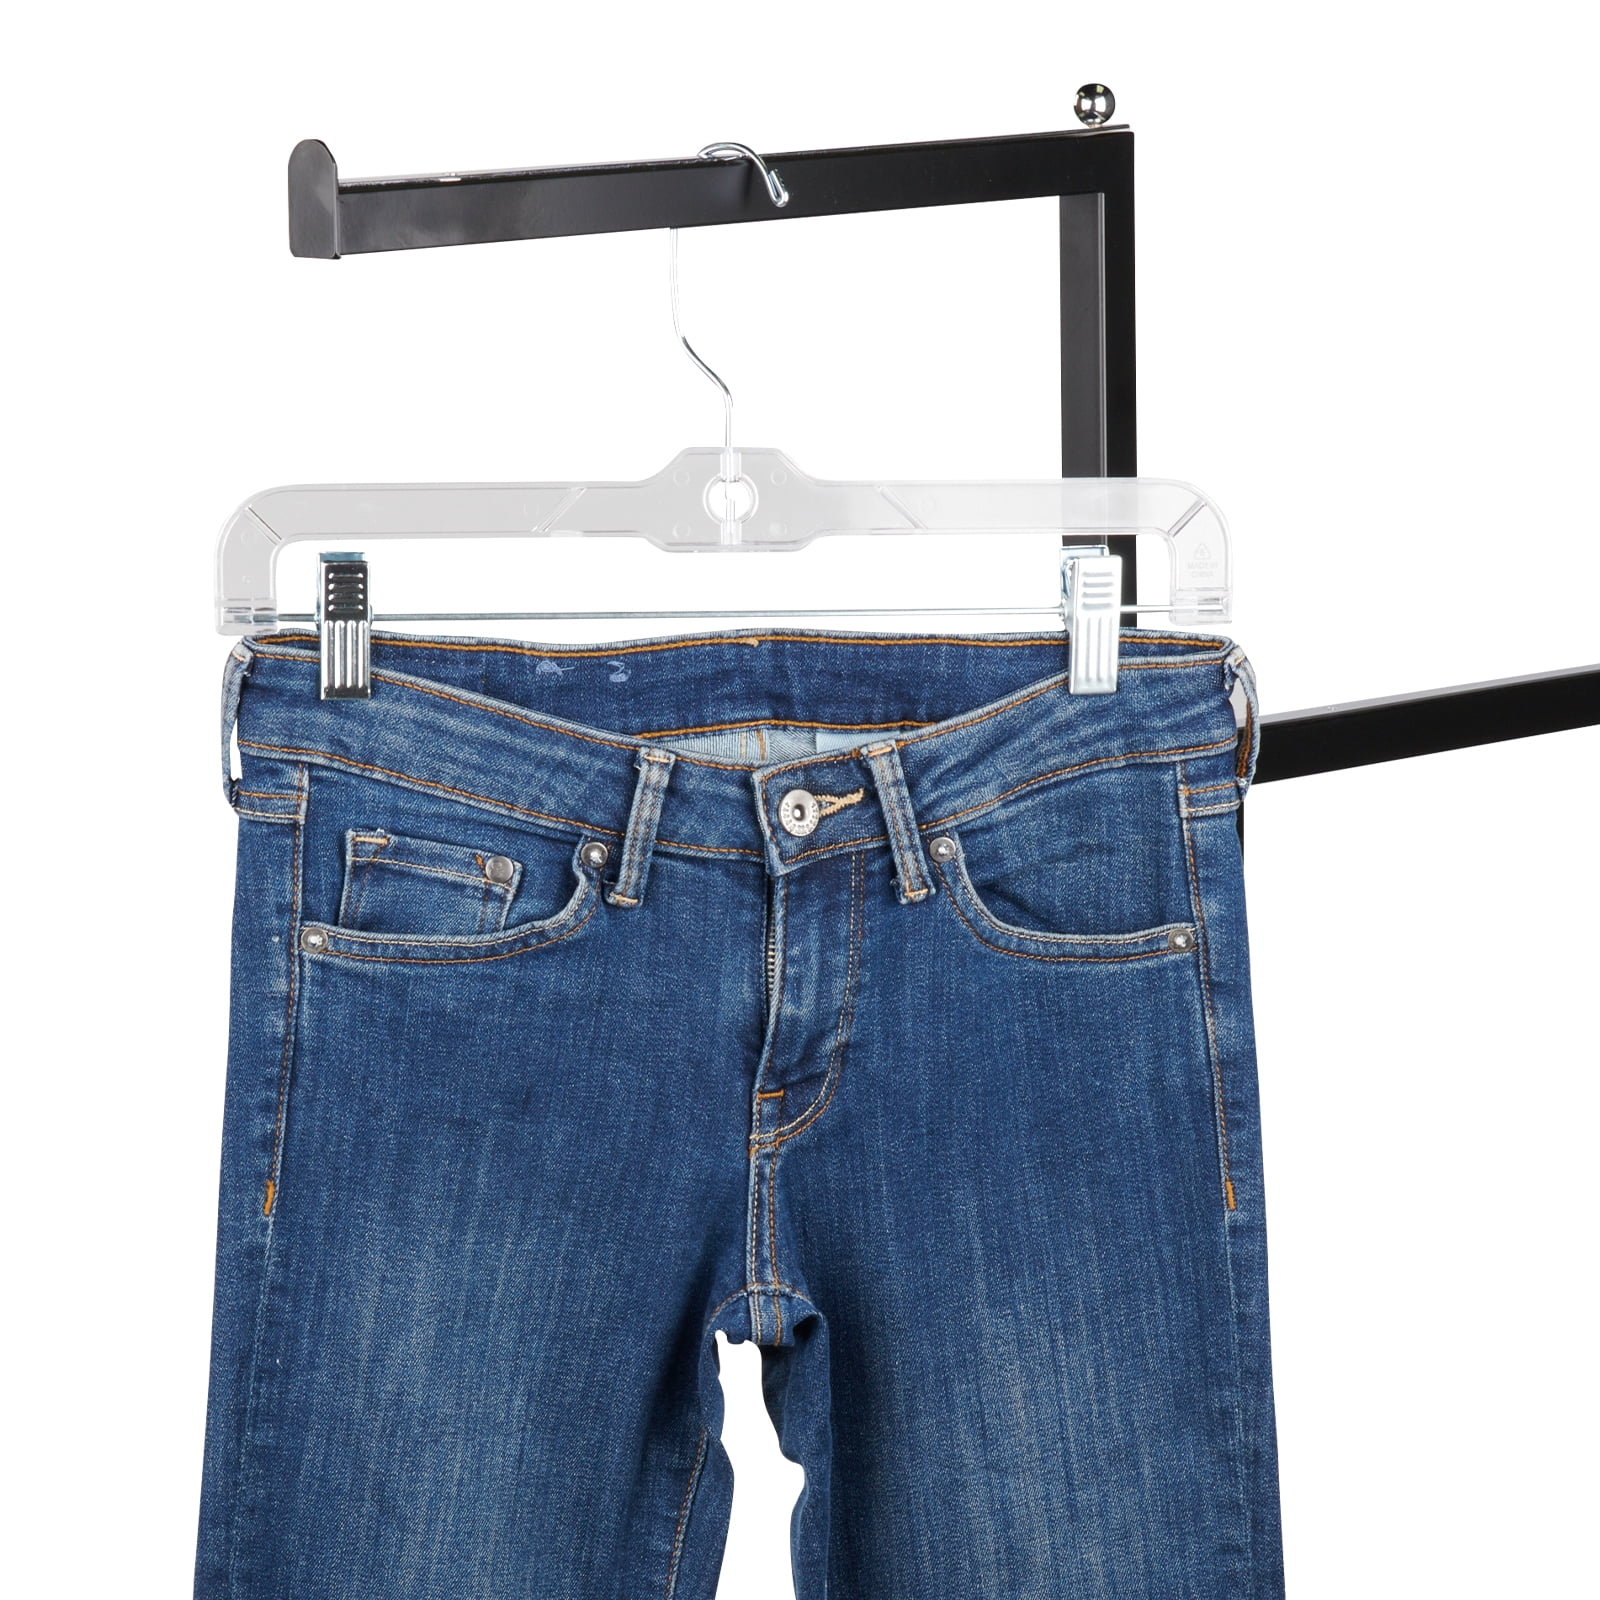 Plastic Skirt Hangers - 14 Length/ 4 5/8 Neck - 100/Box - Clear - WAWAK  Sewing Supplies